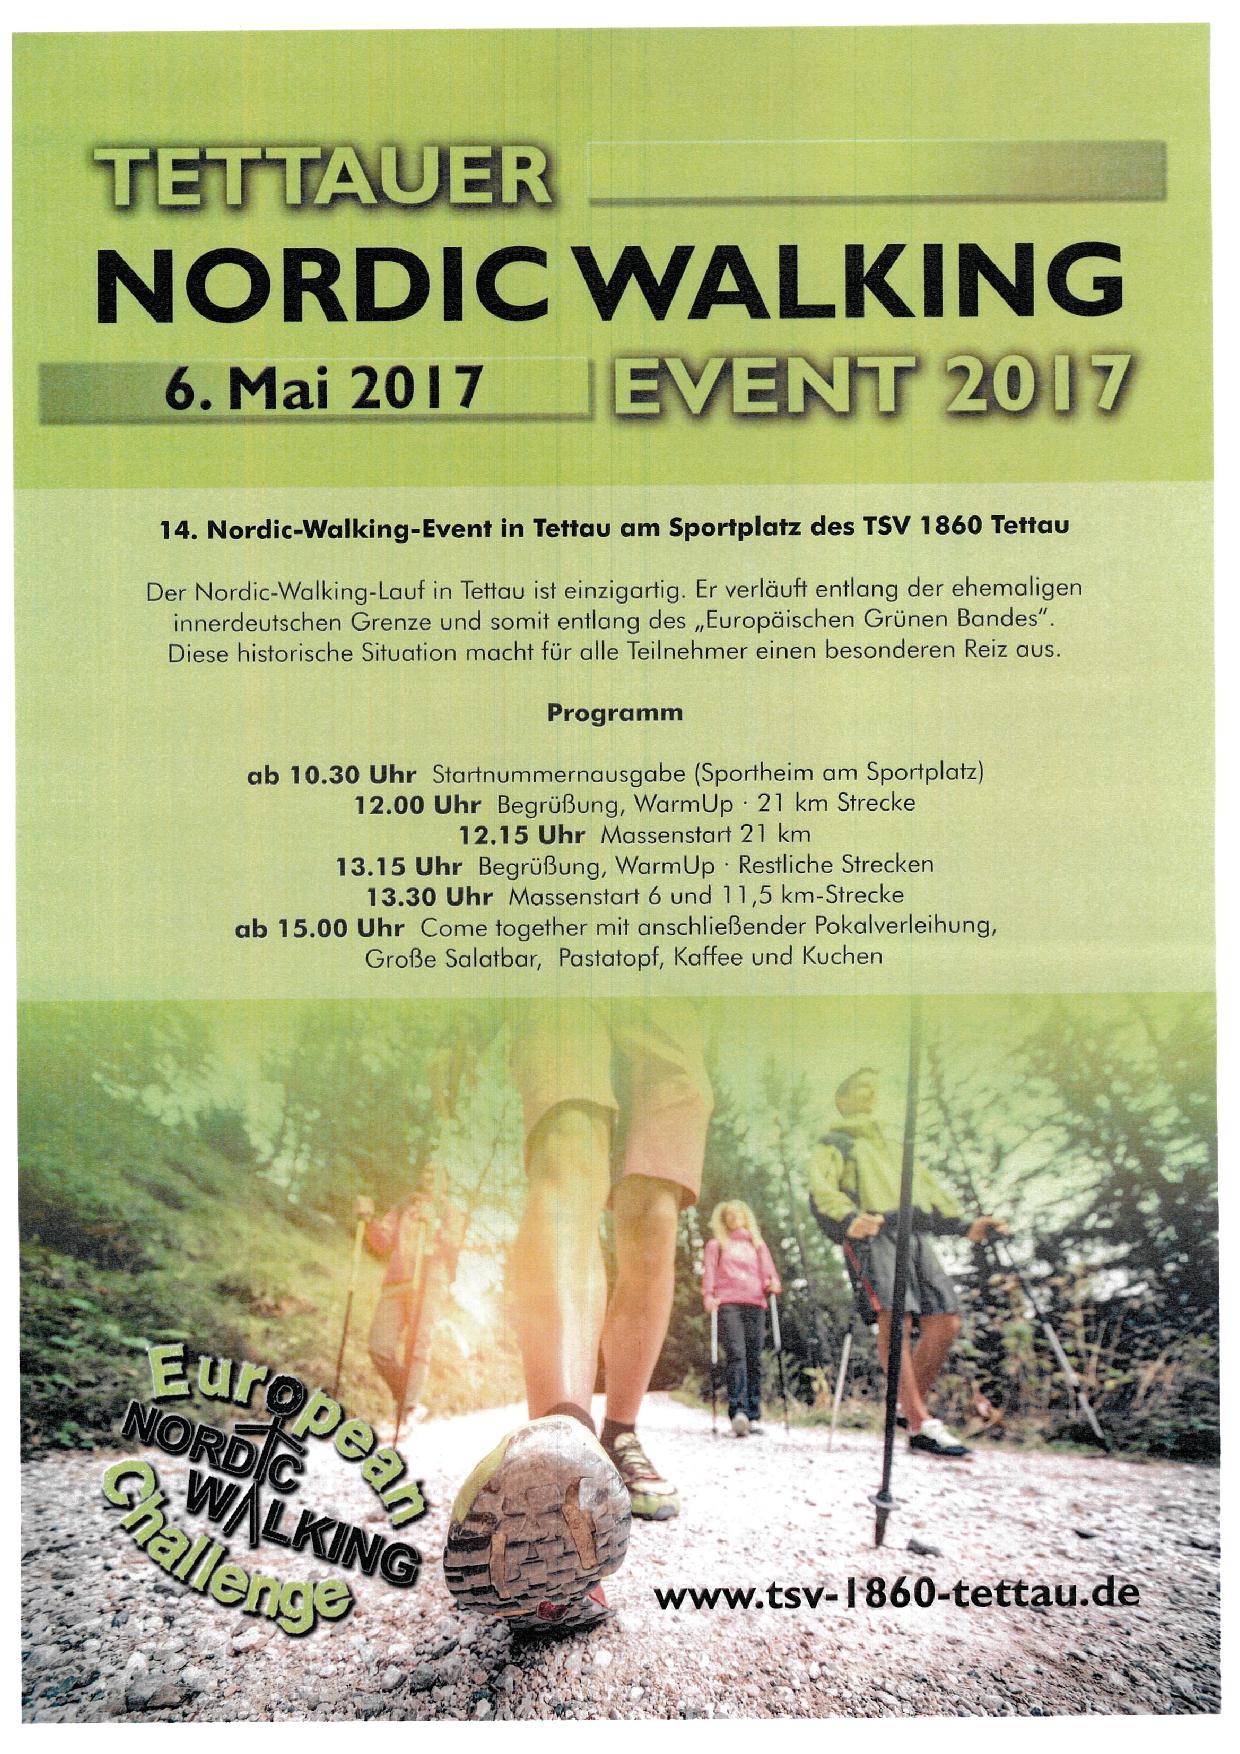 Nordic-Walking-Event 2017